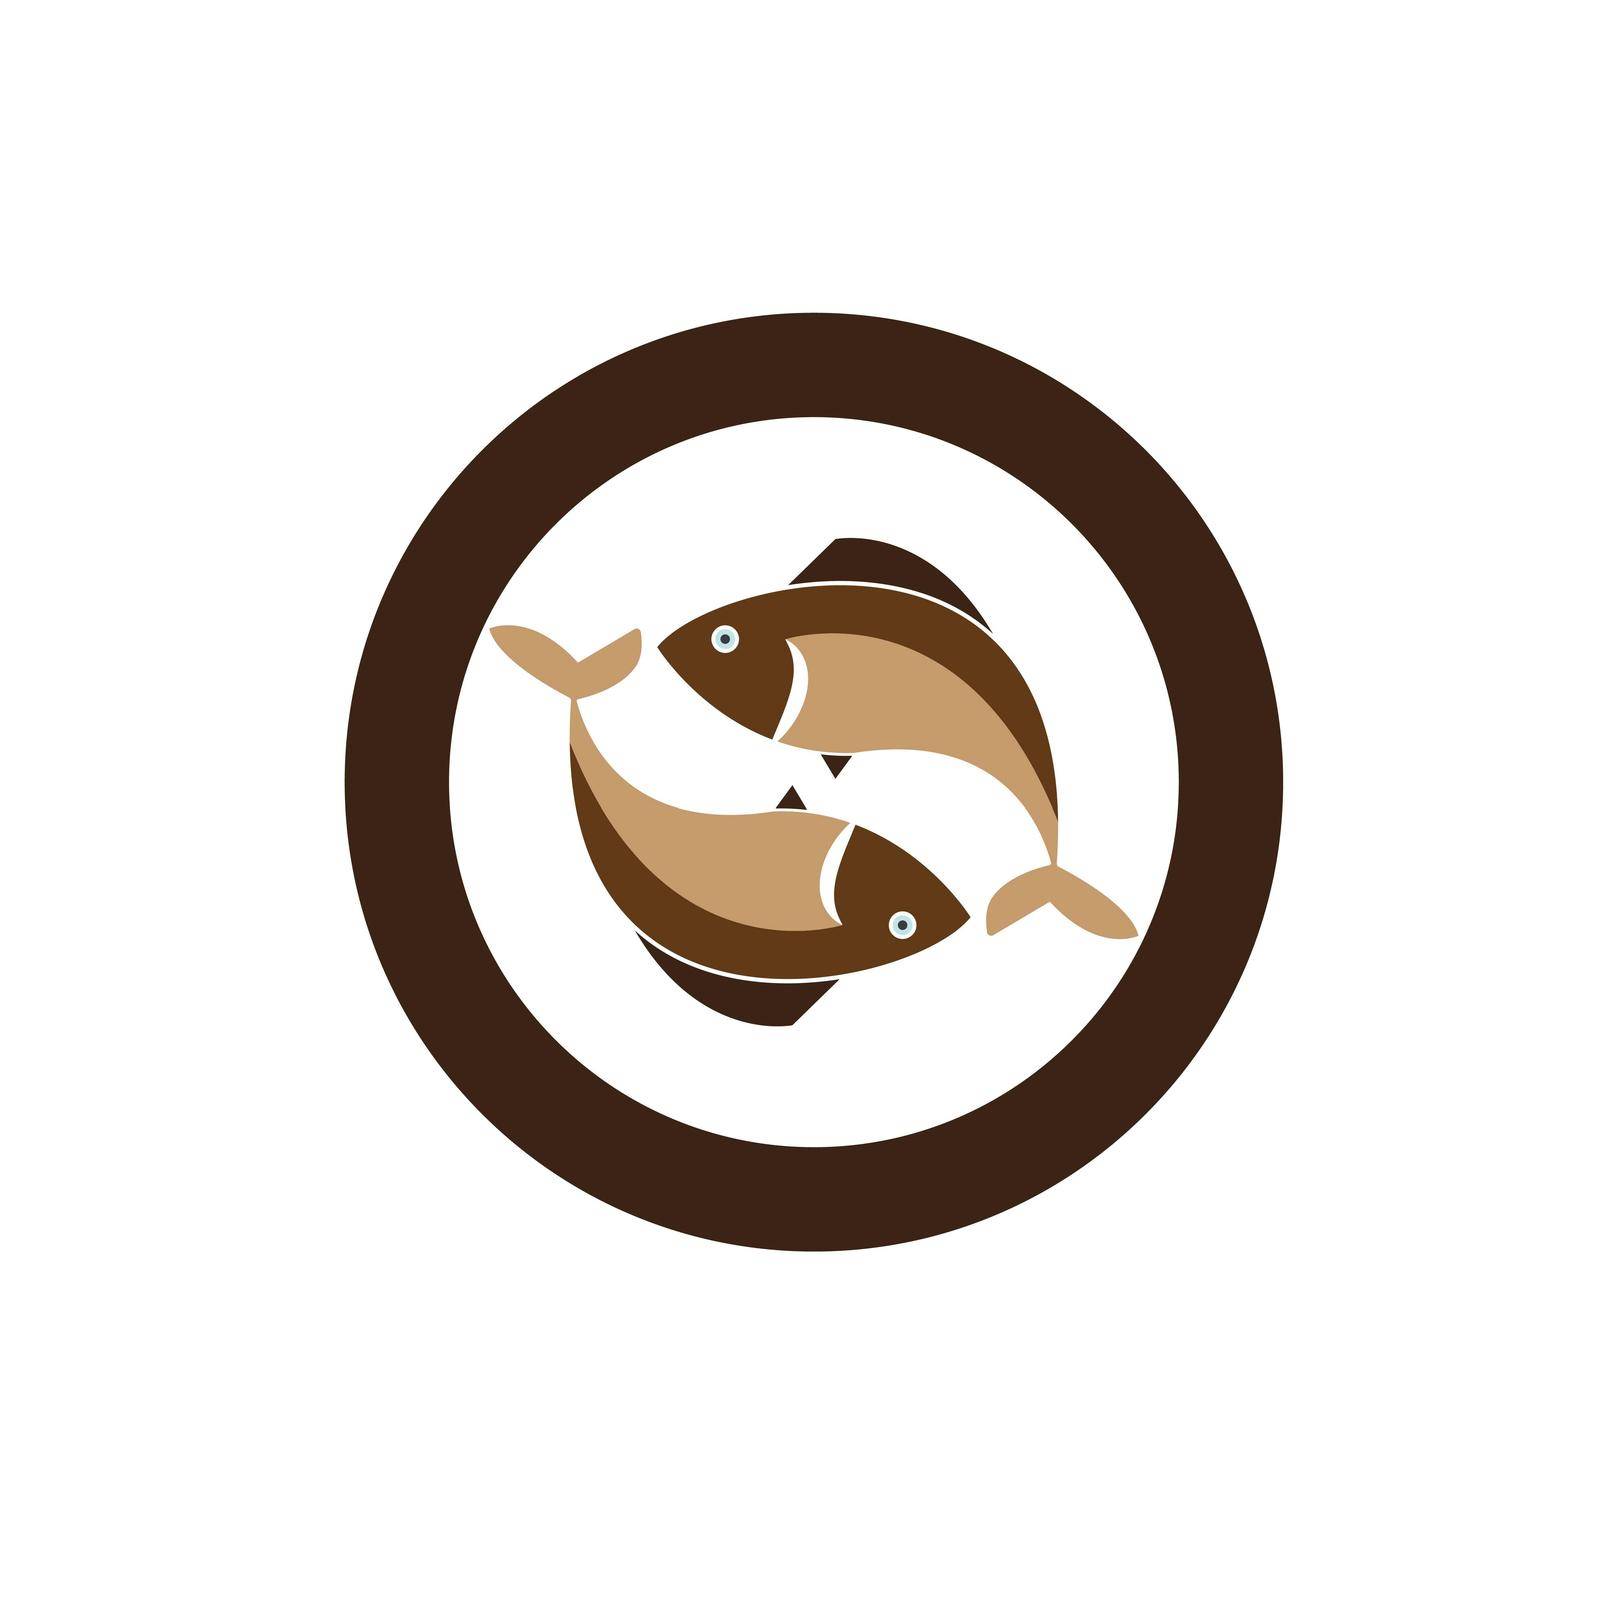 fish logo by rnking